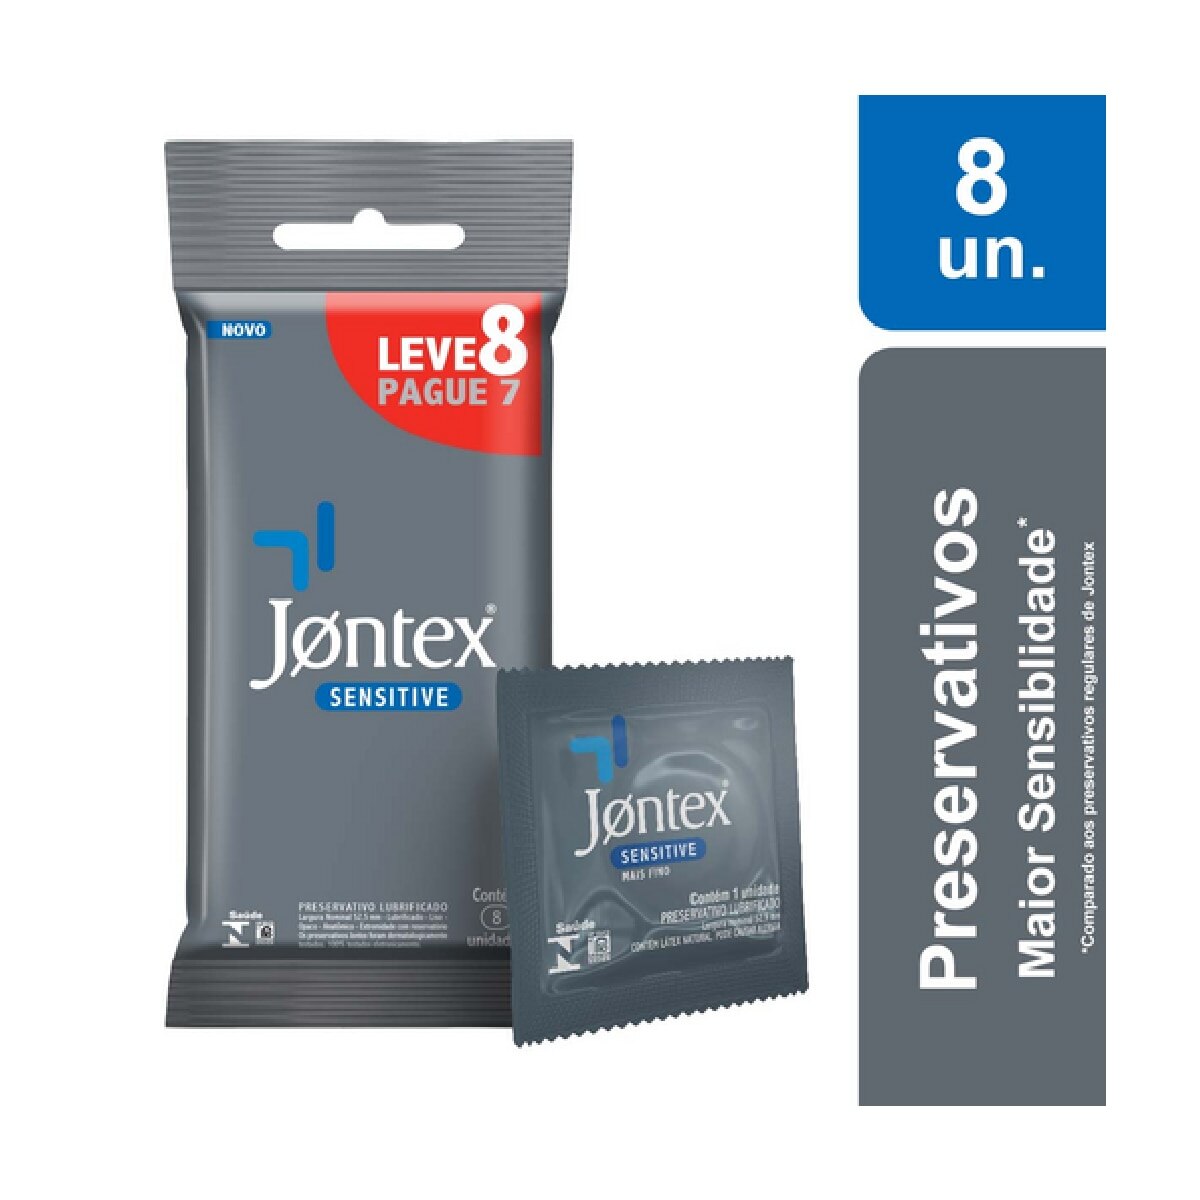 Preservativo Jontex Sensitive Leve 8 Pague 7